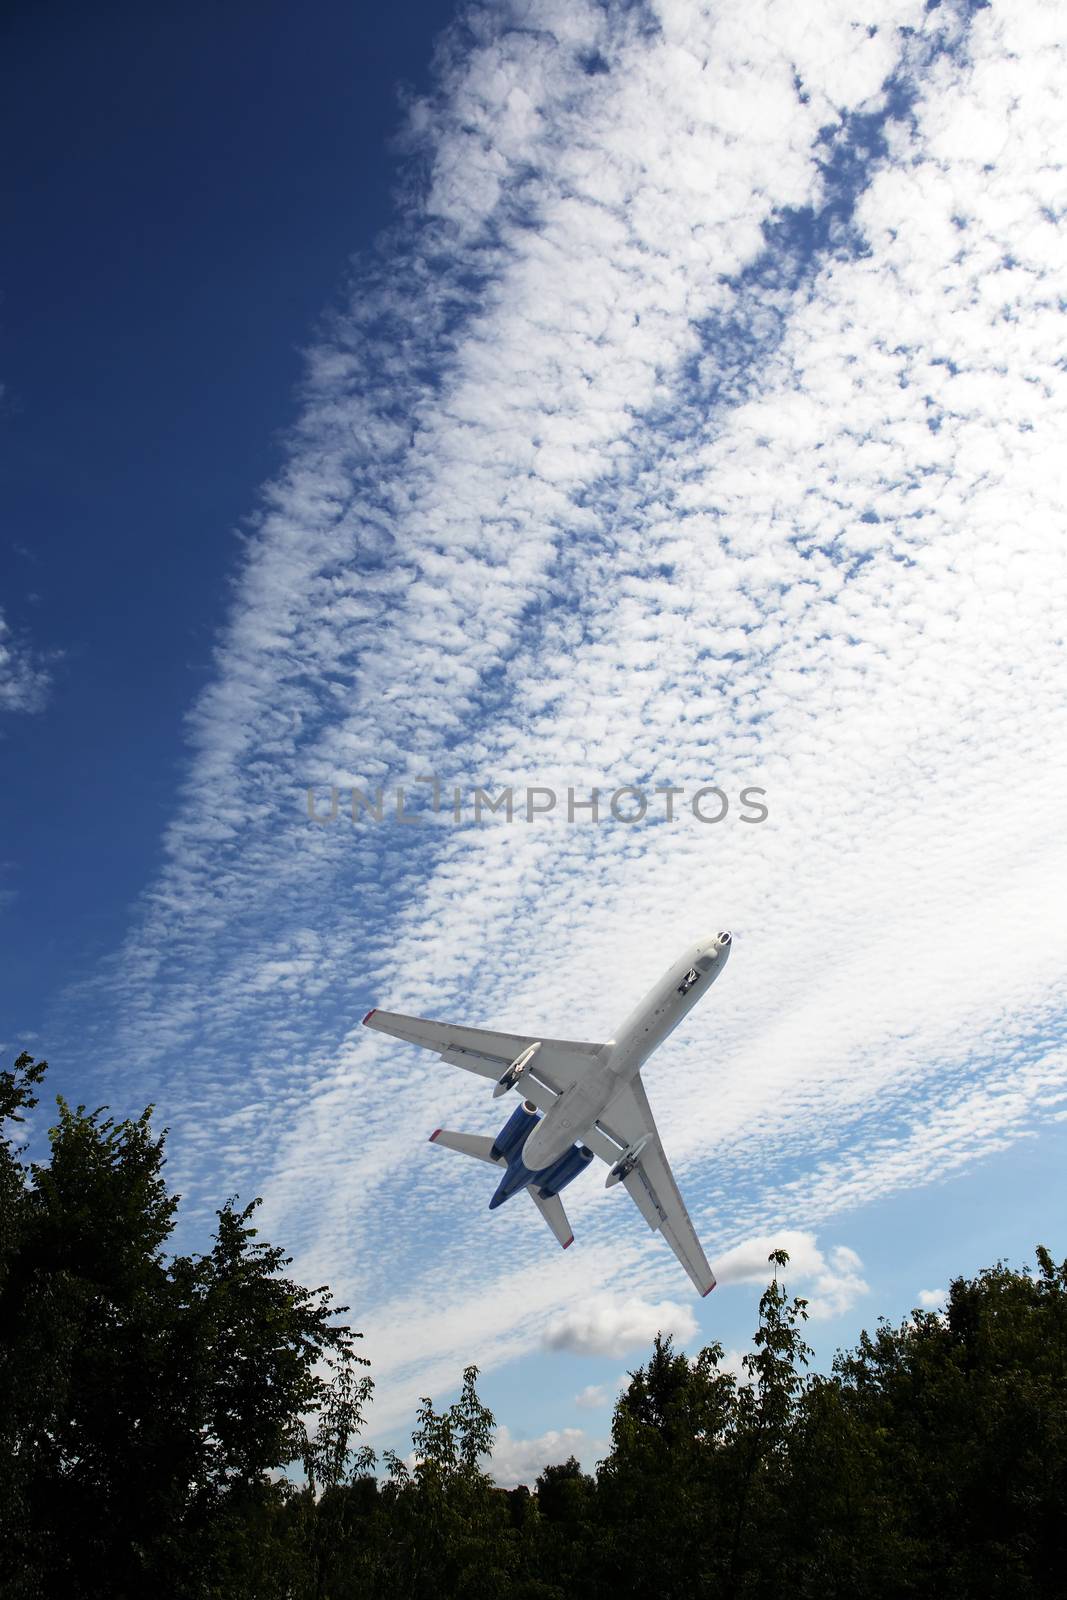 Passenger Airplane Take-Off by kvkirillov